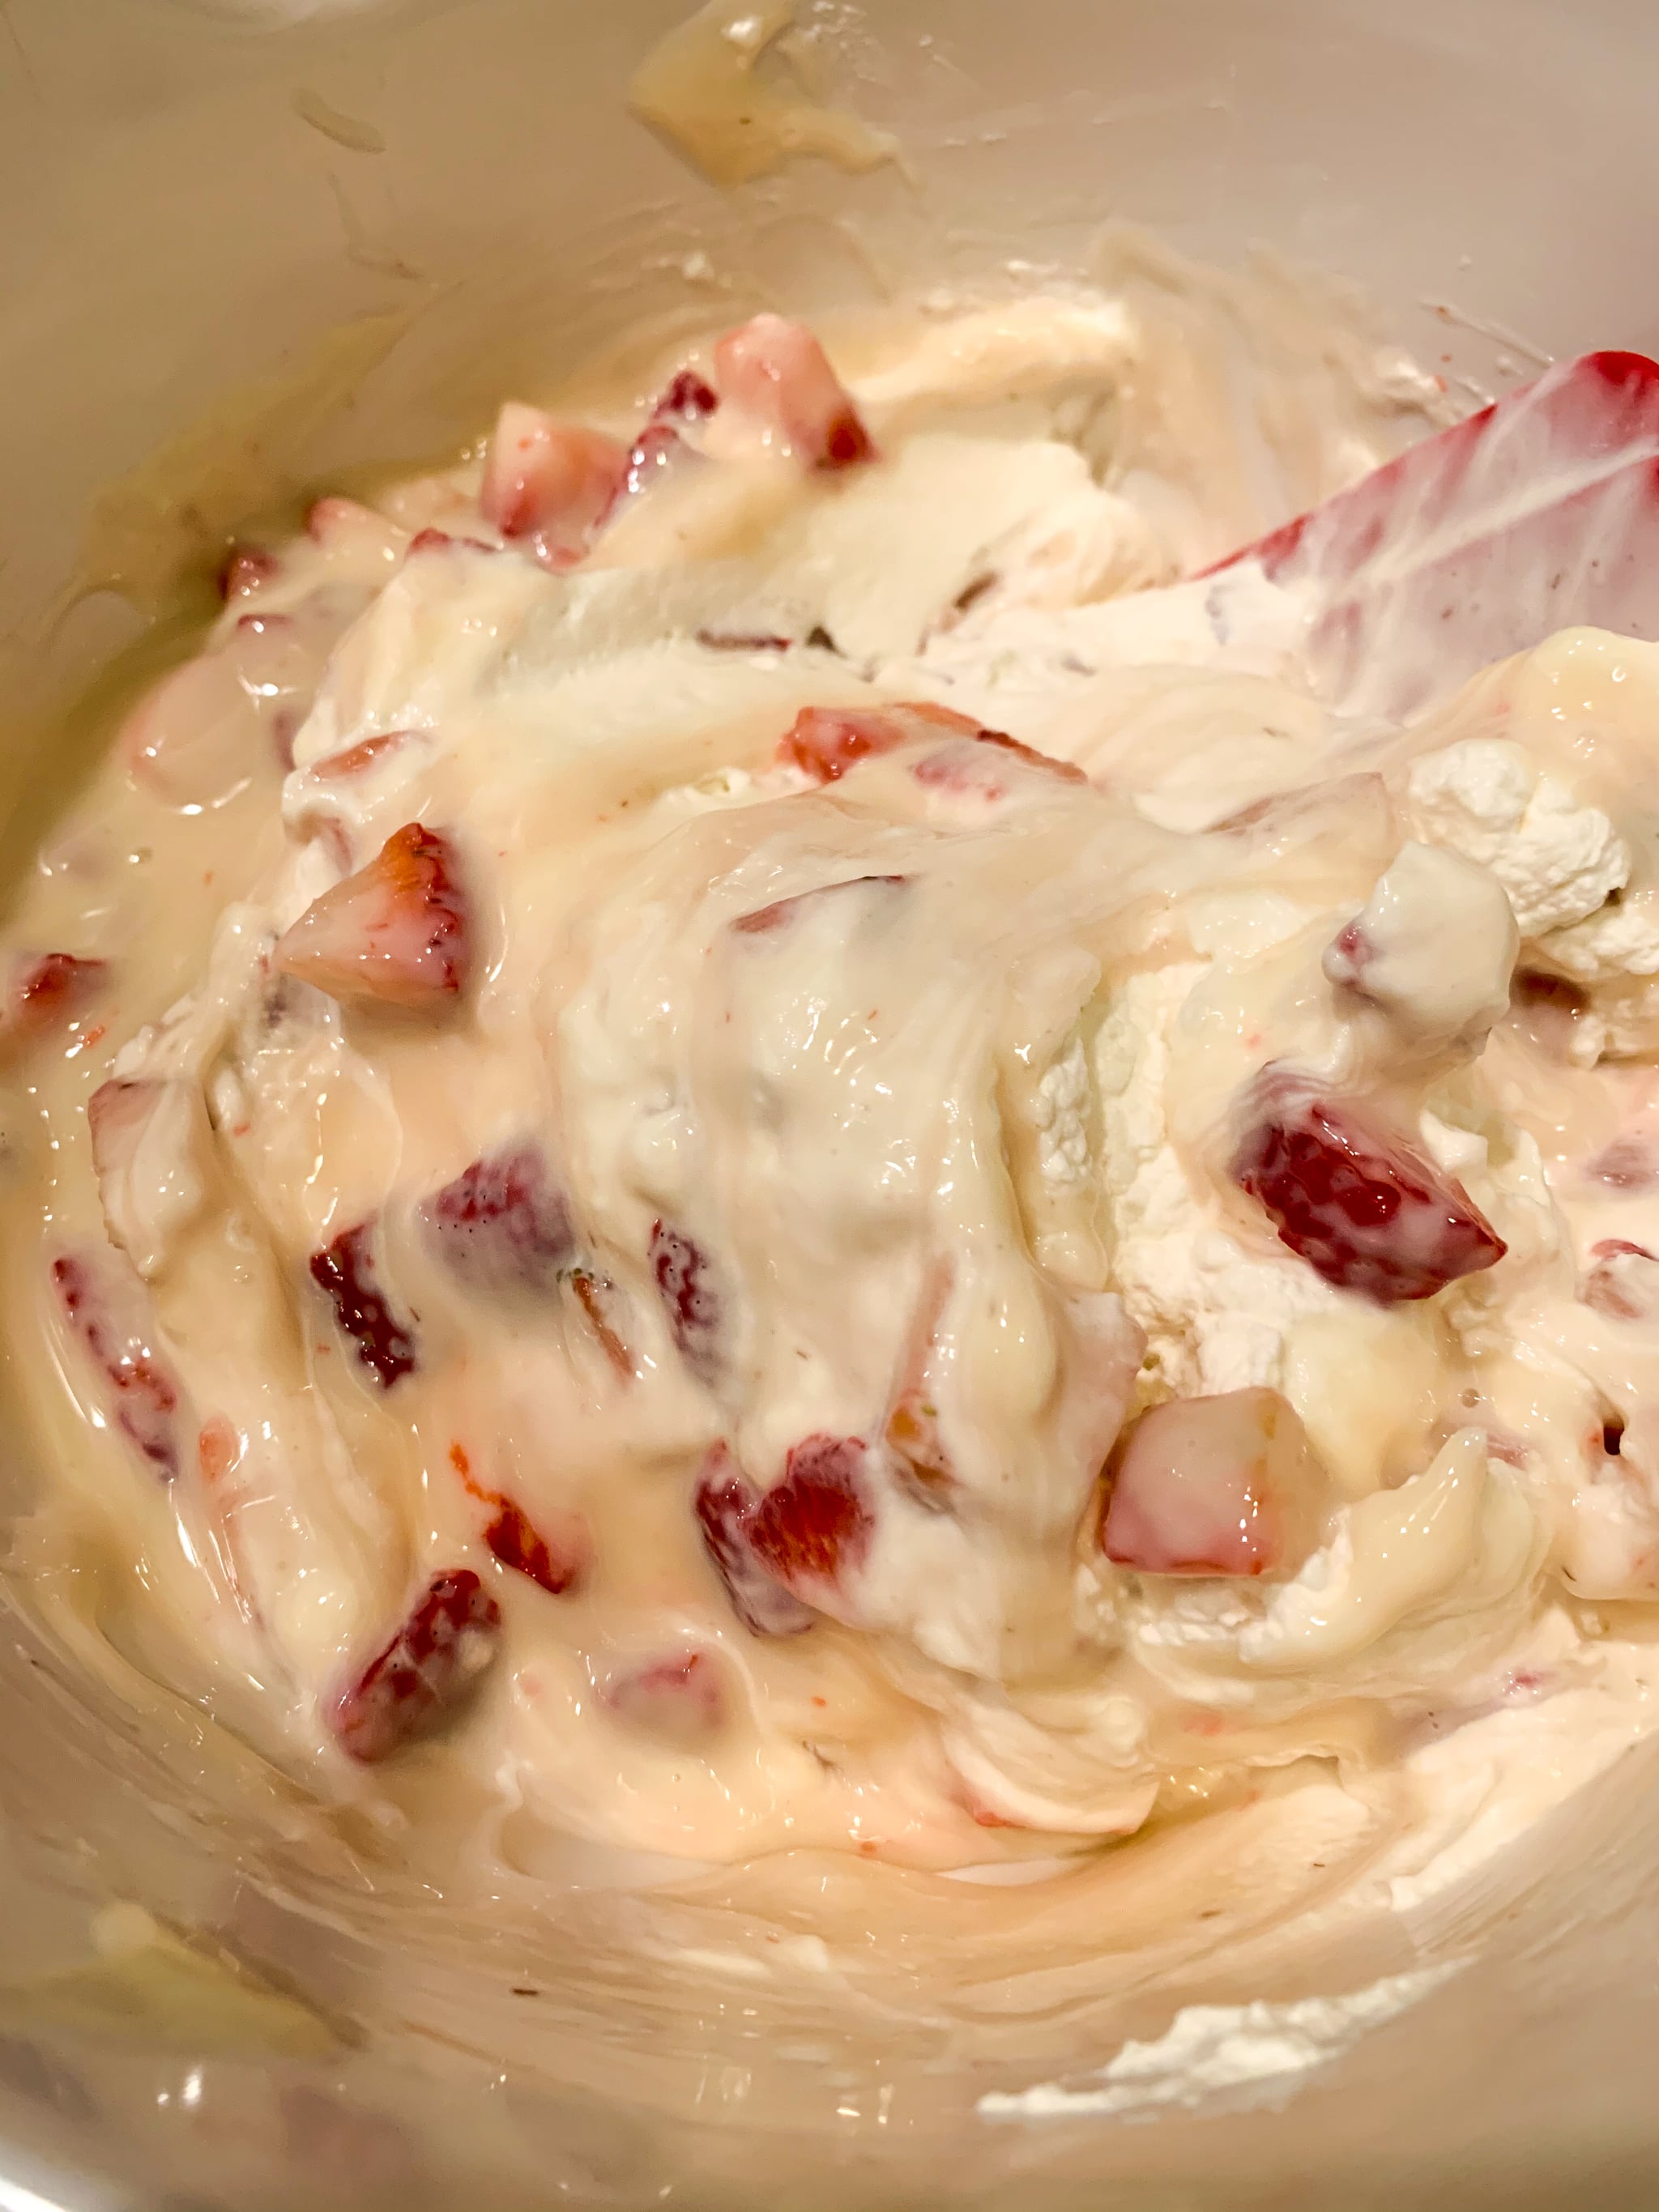 Joanna Gaines's Strawberry Pie Recipe With Photos | POPSUGAR Food